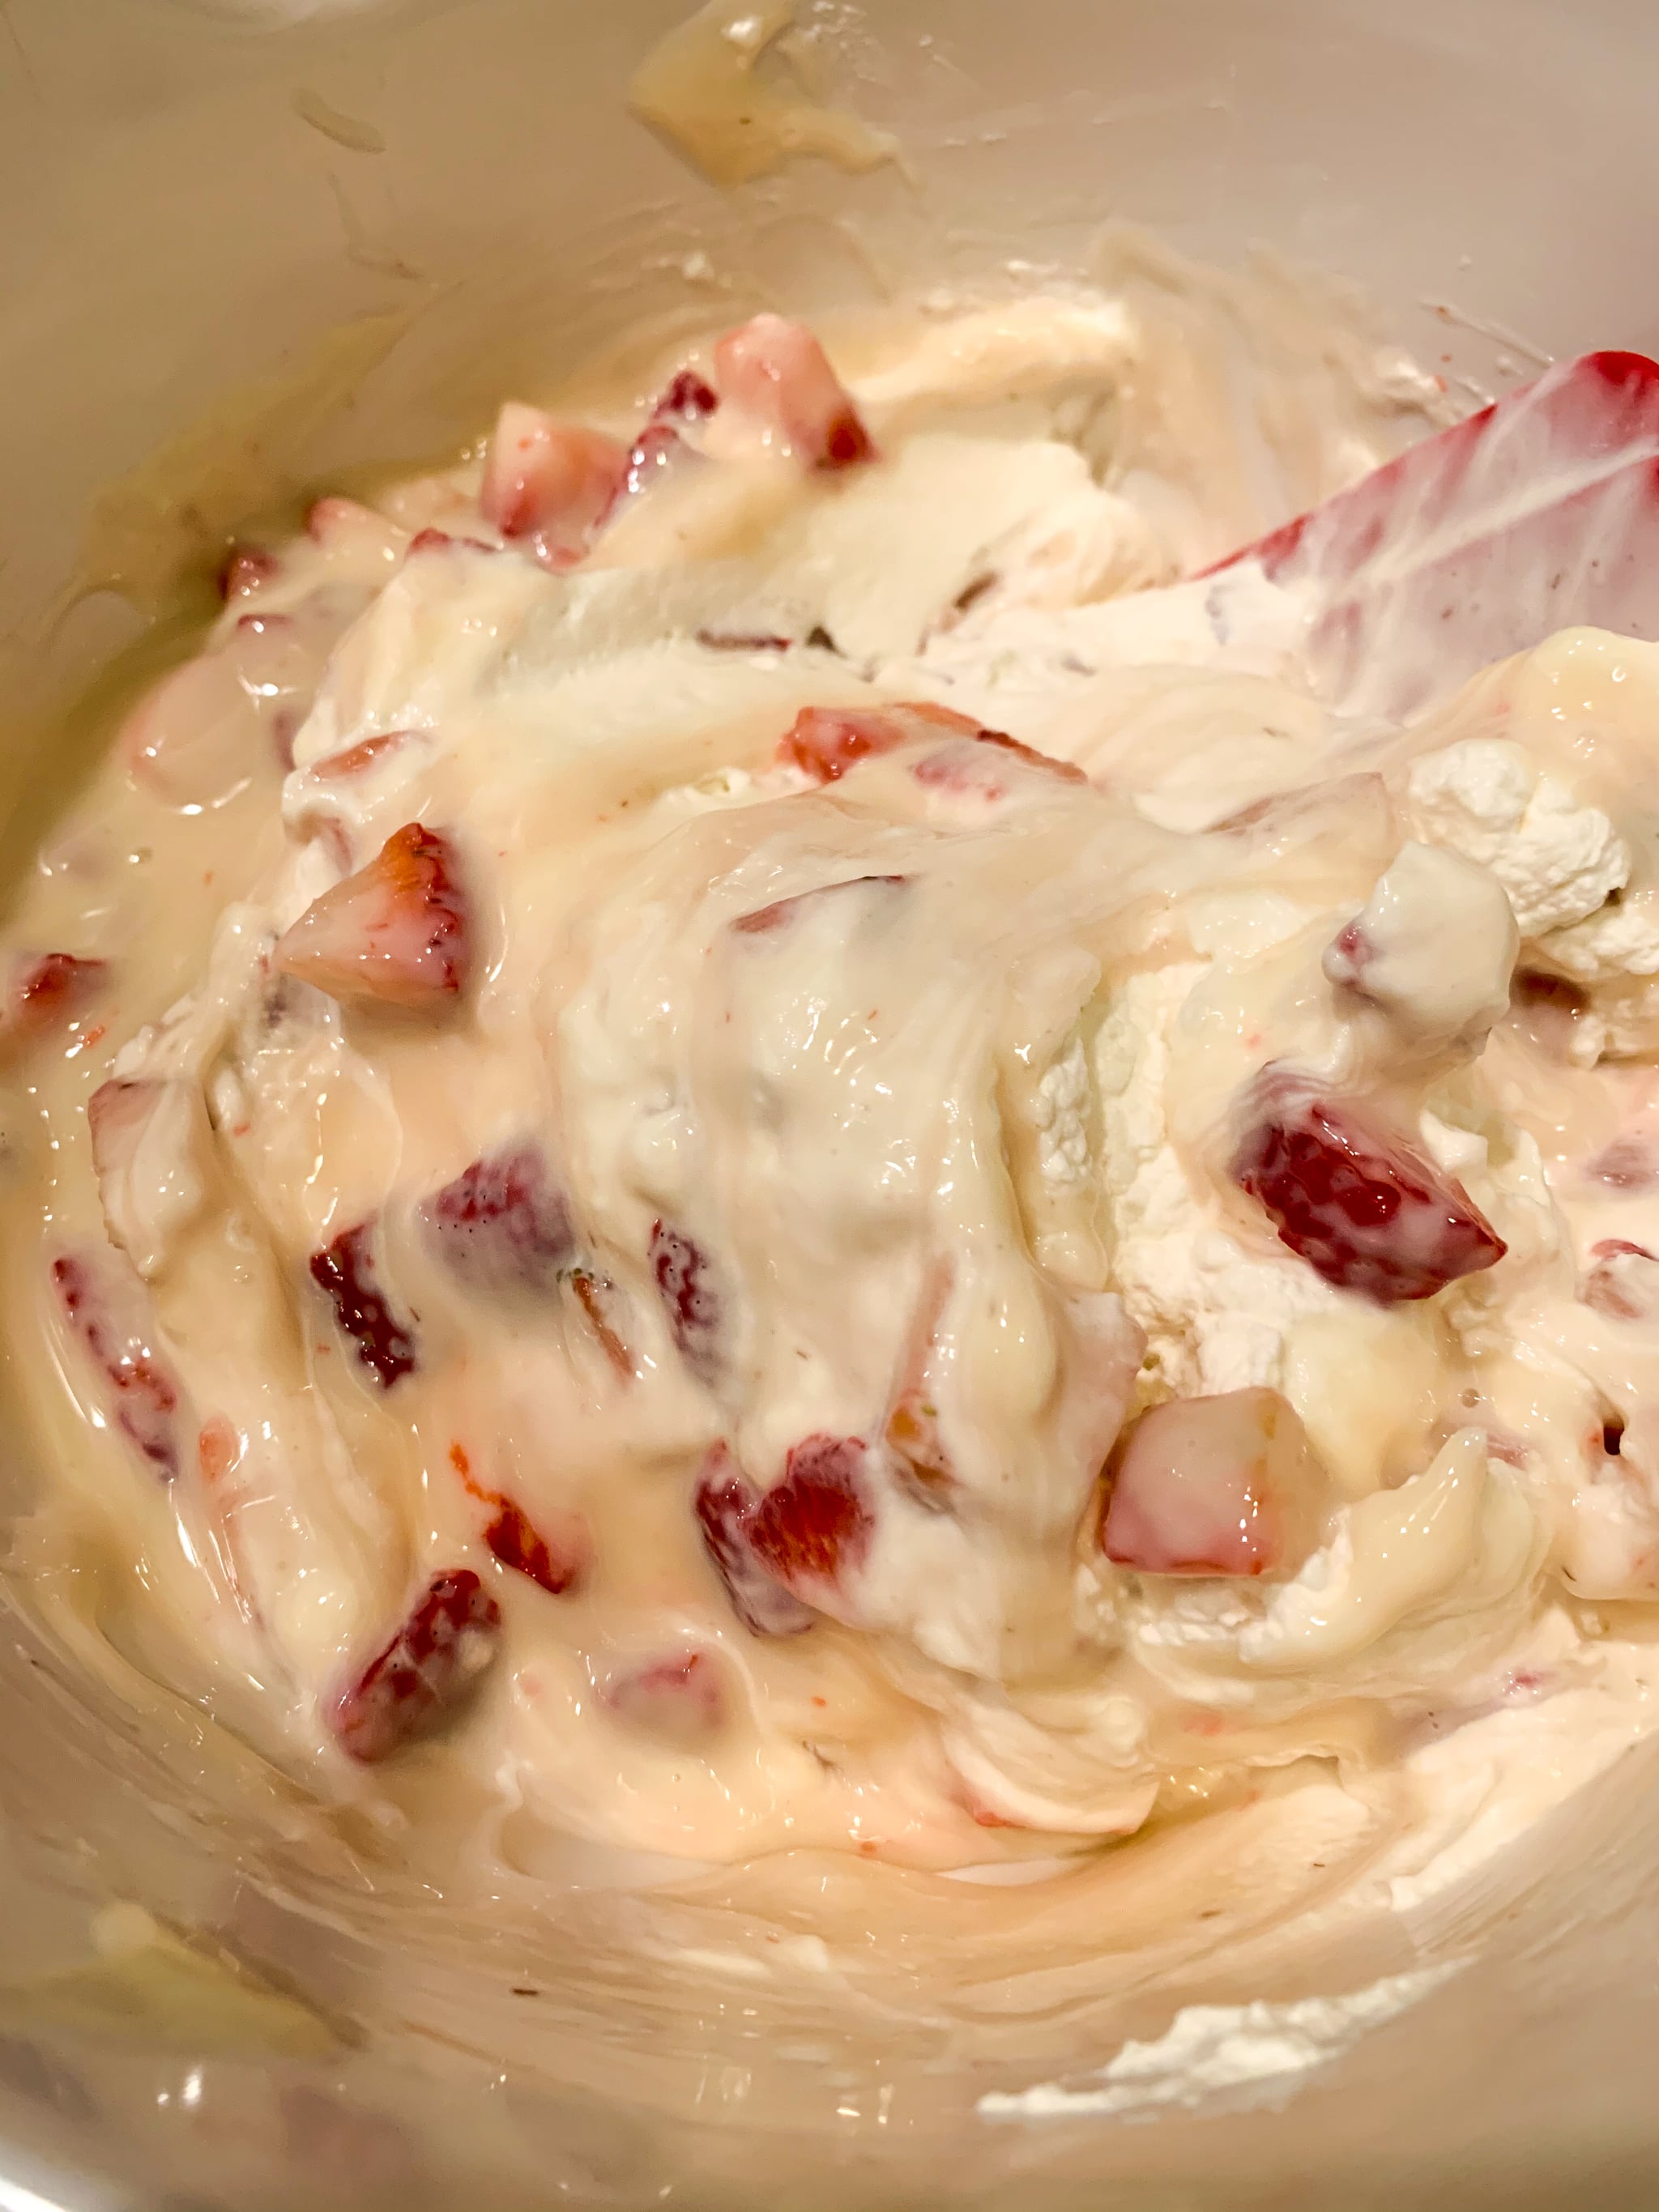 Joanna Gaines's Strawberry Pie Recipe With Photos | POPSUGAR Food